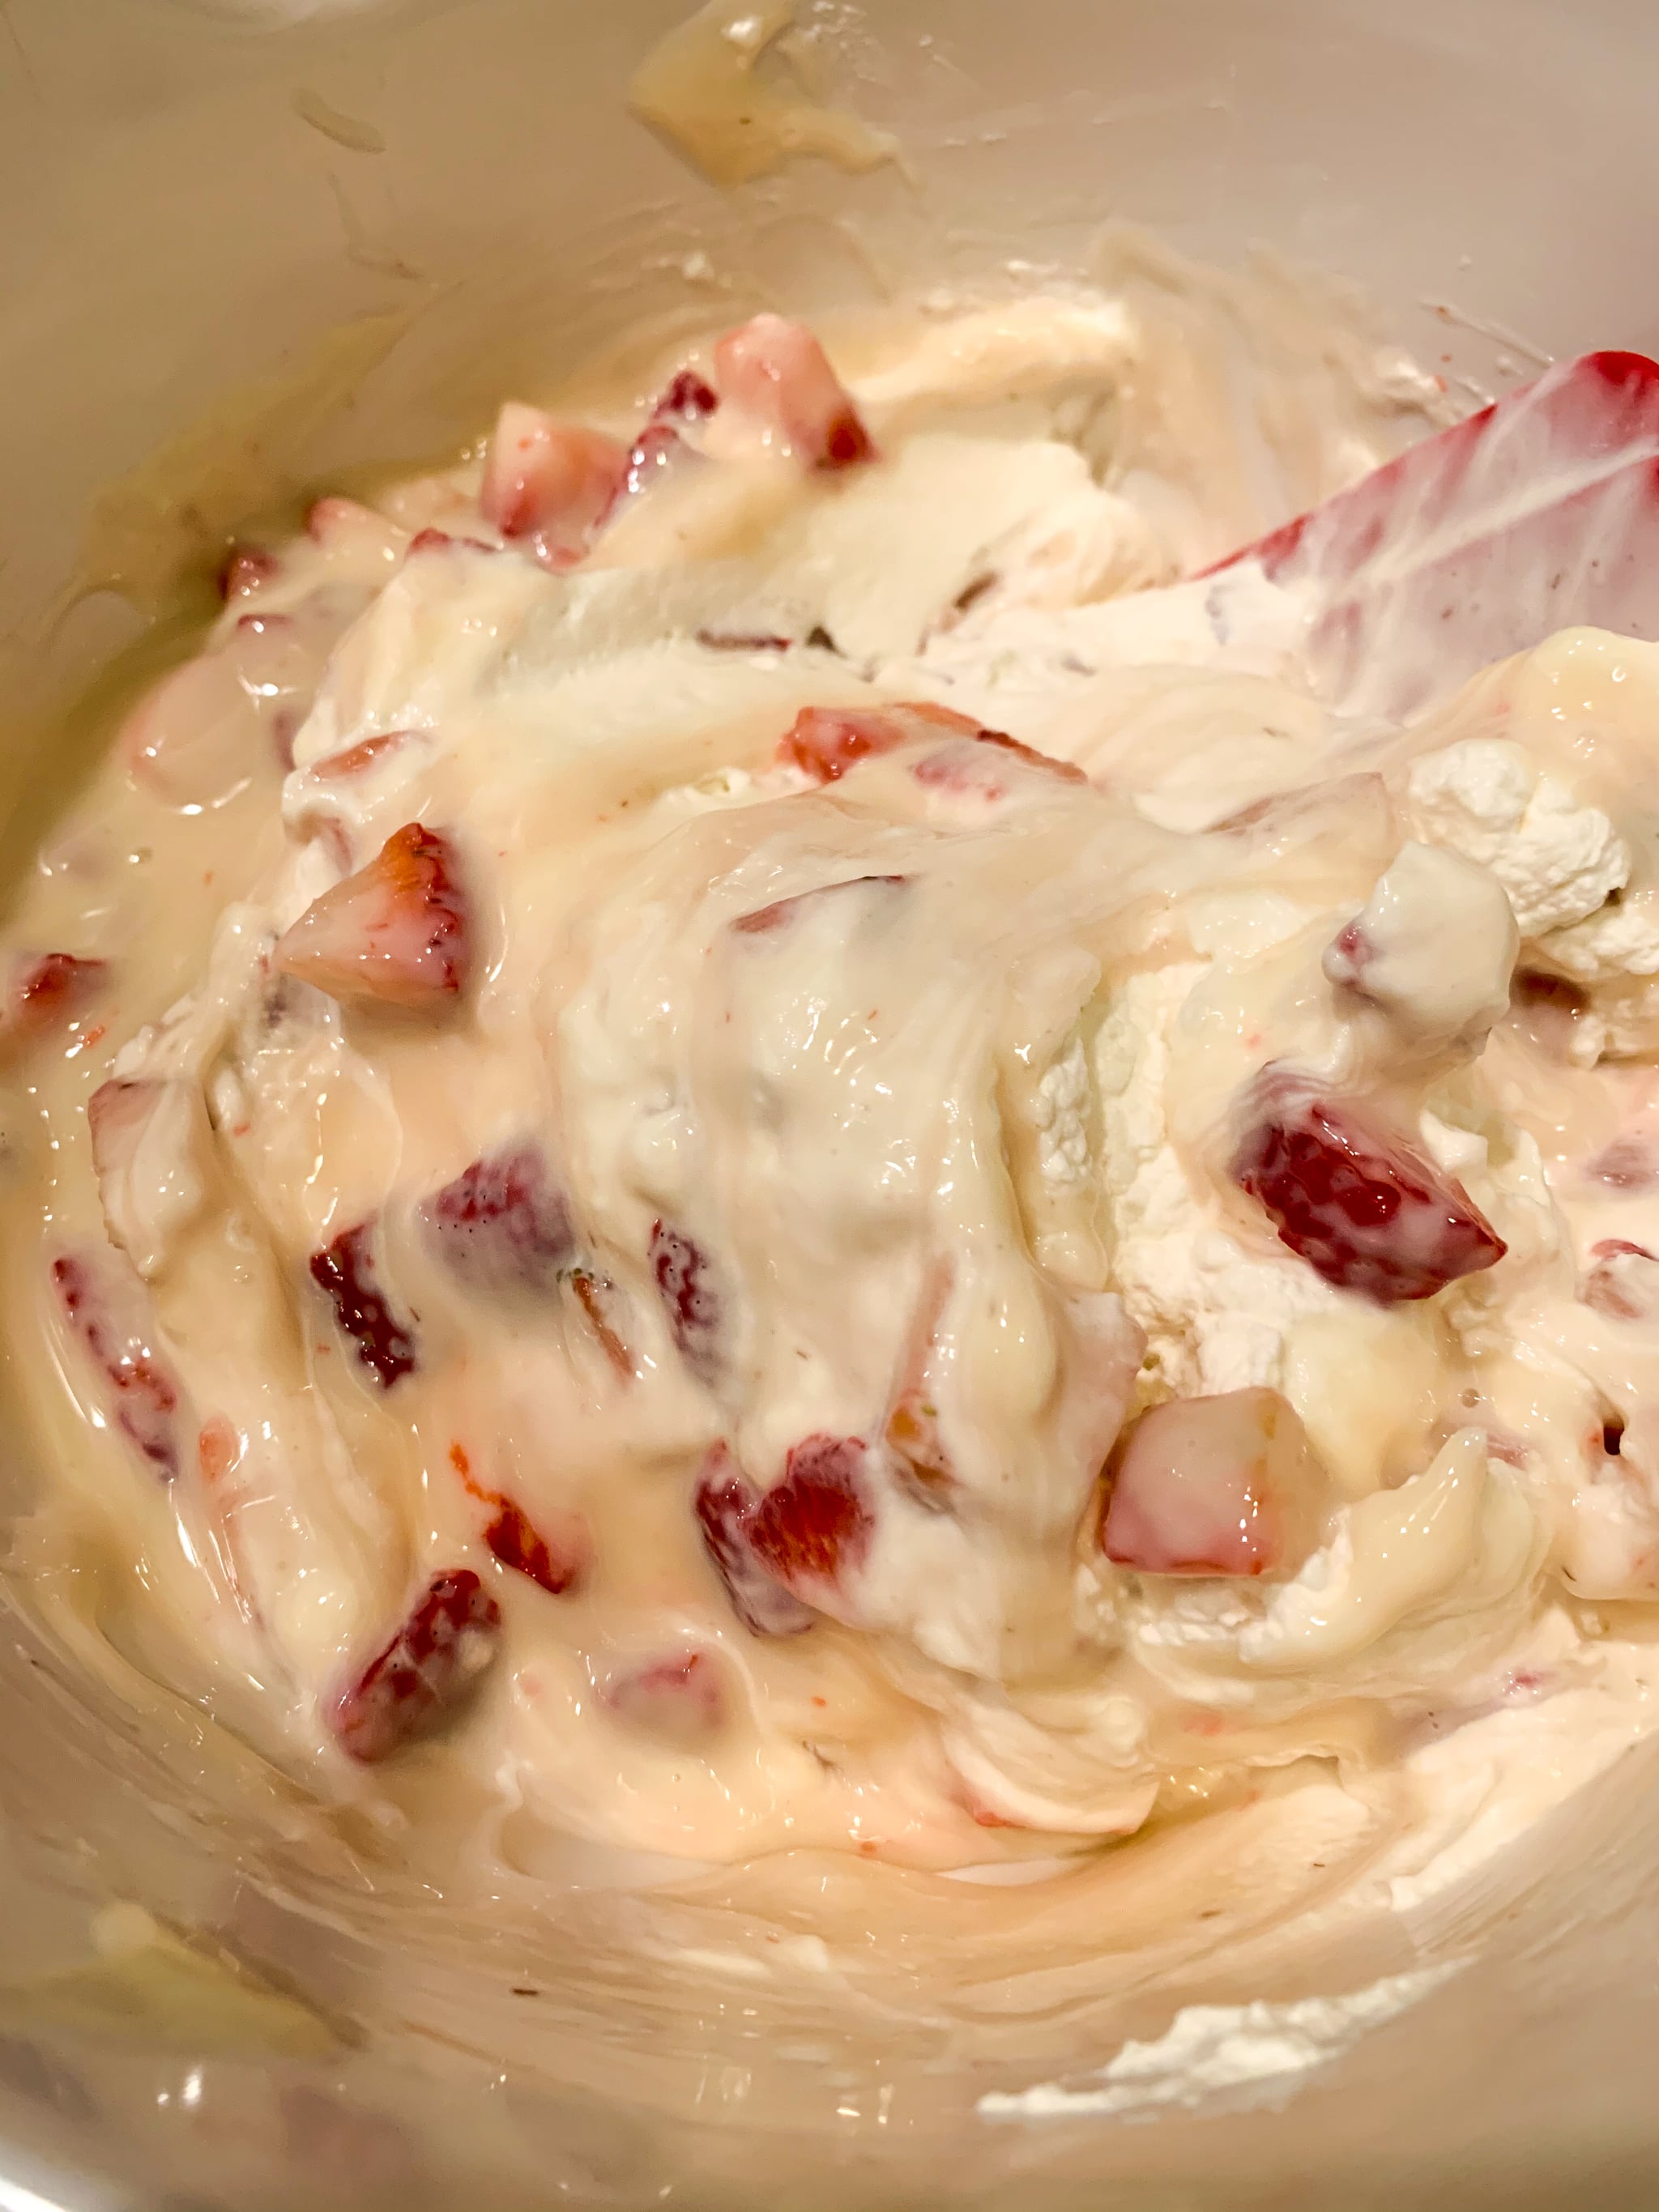 Joanna Gaines's Strawberry Pie Recipe With Photos | POPSUGAR Food